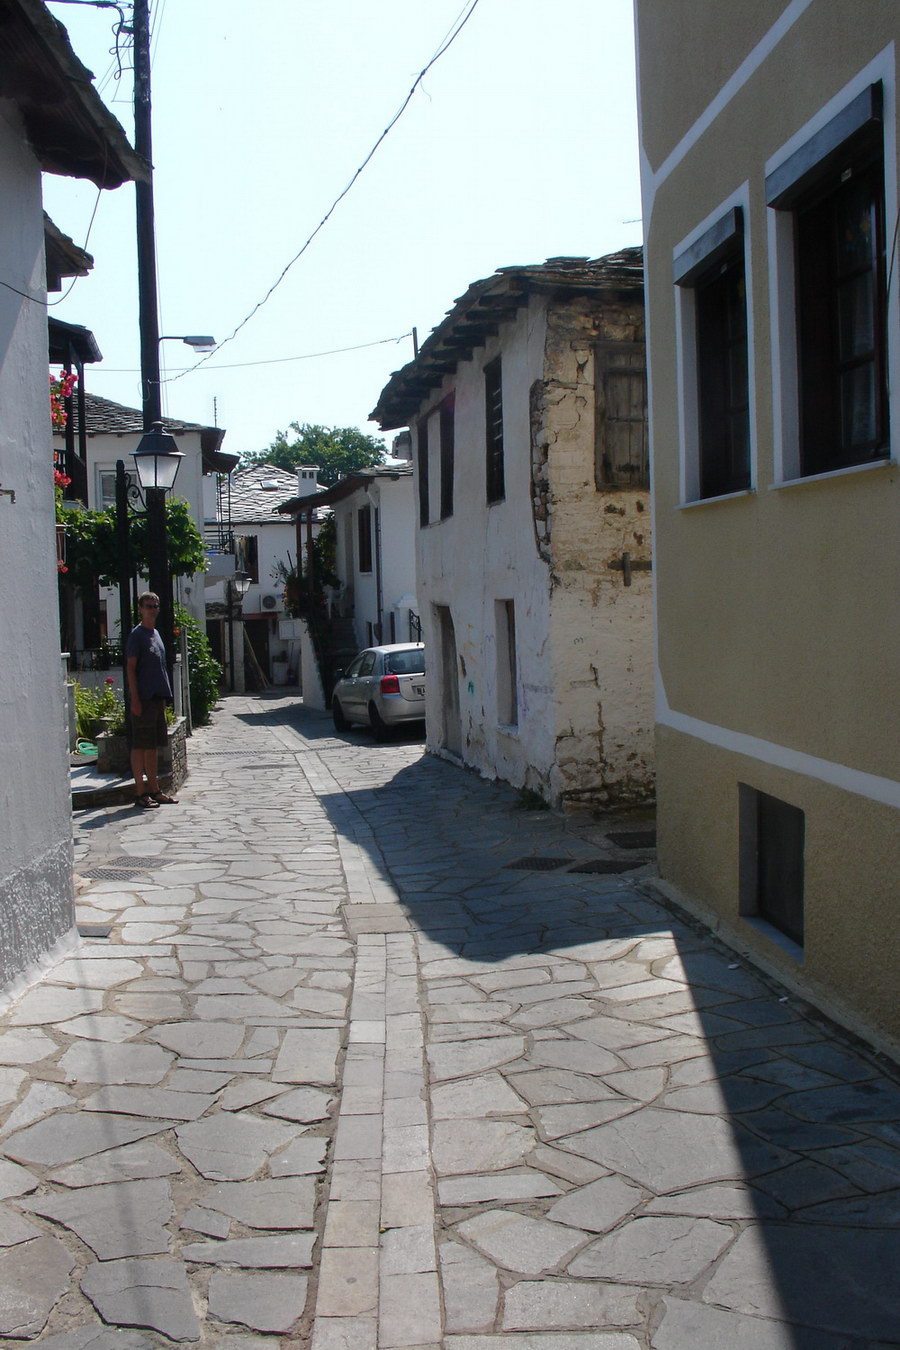 Panagia streets, Thasso - Greece.